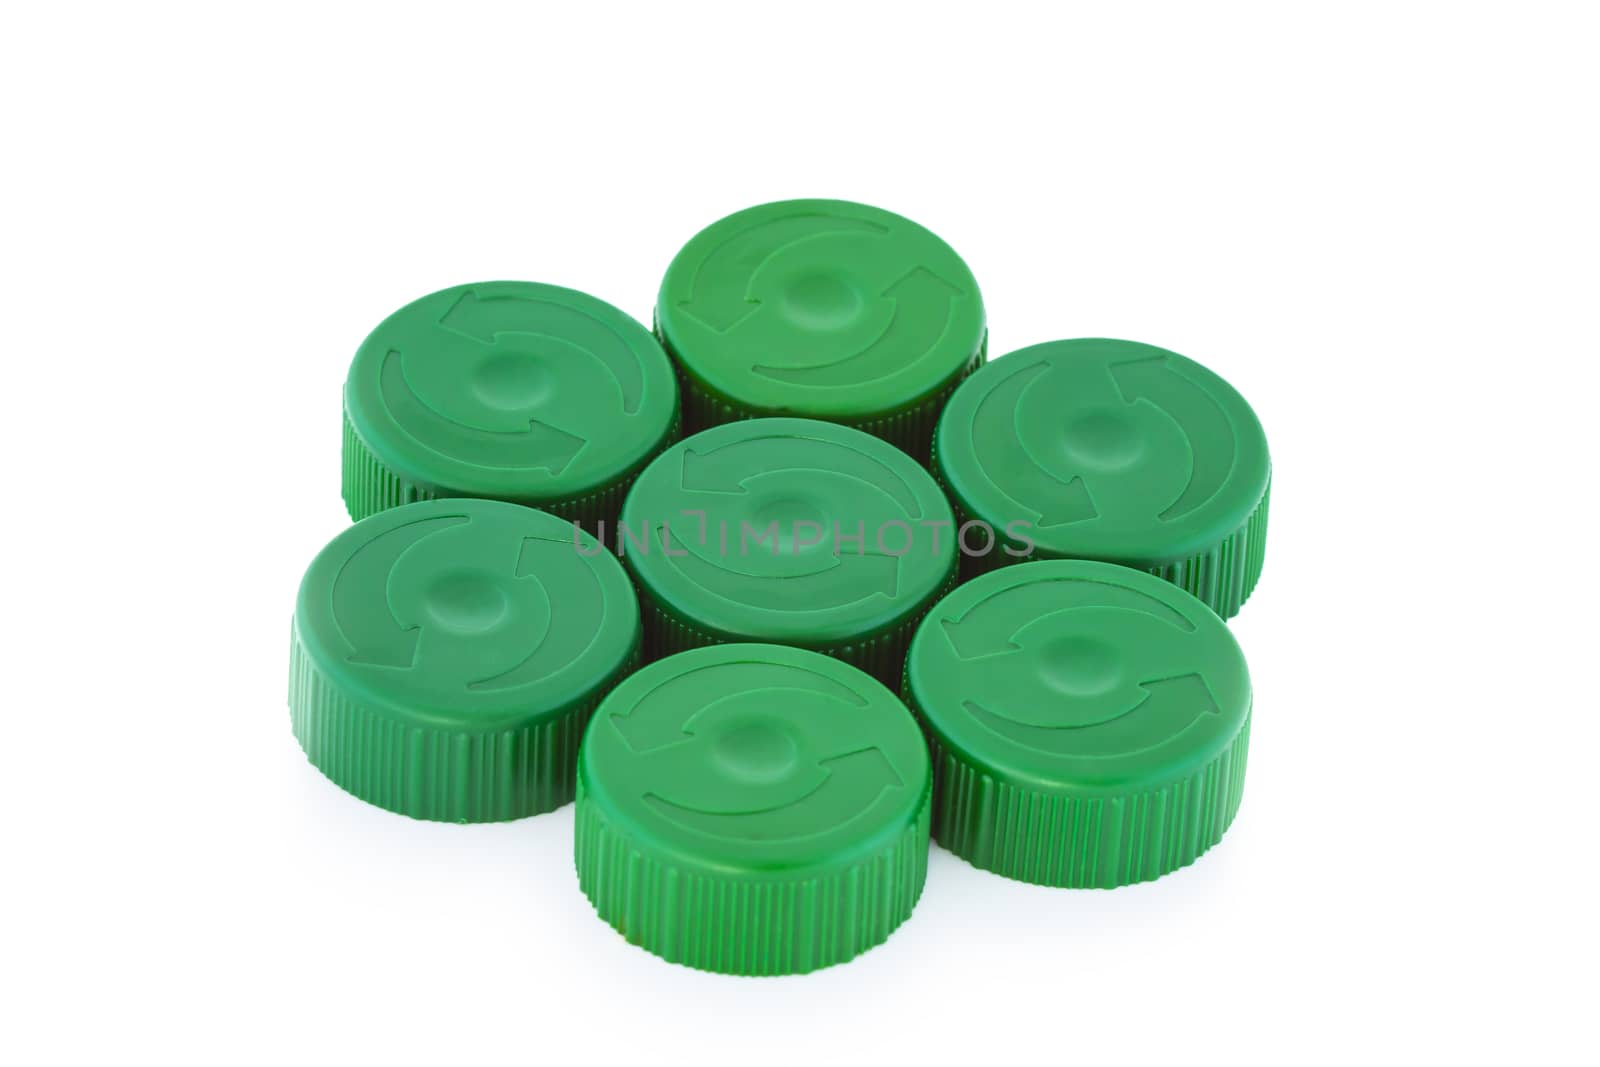 Seven green plastic bottle caps by Gbuglok